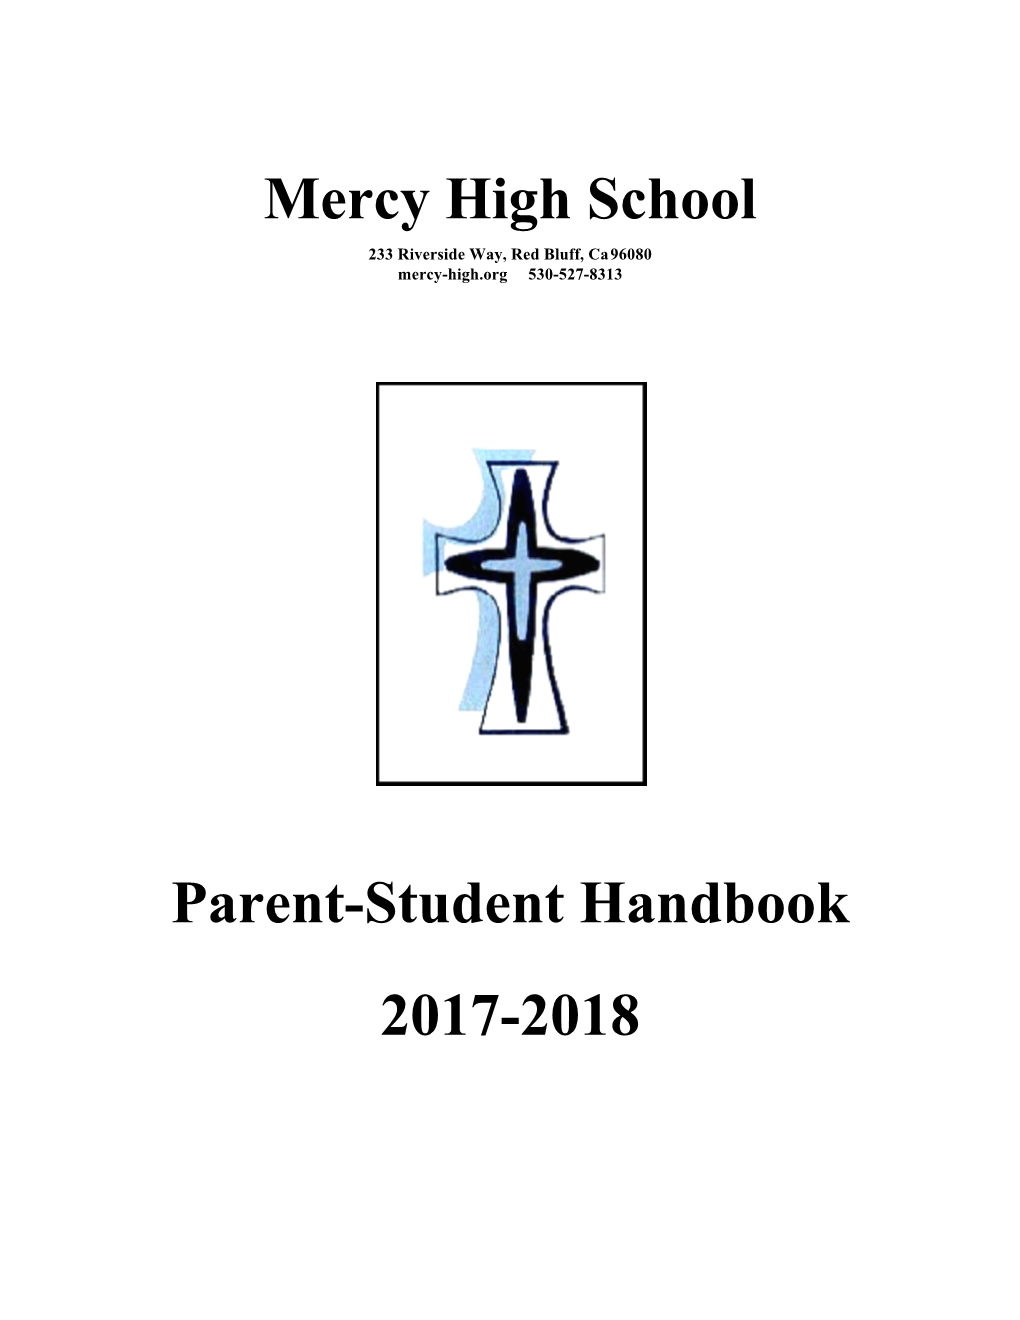 Mercy High School Parent-Student Handbook 2017-2018